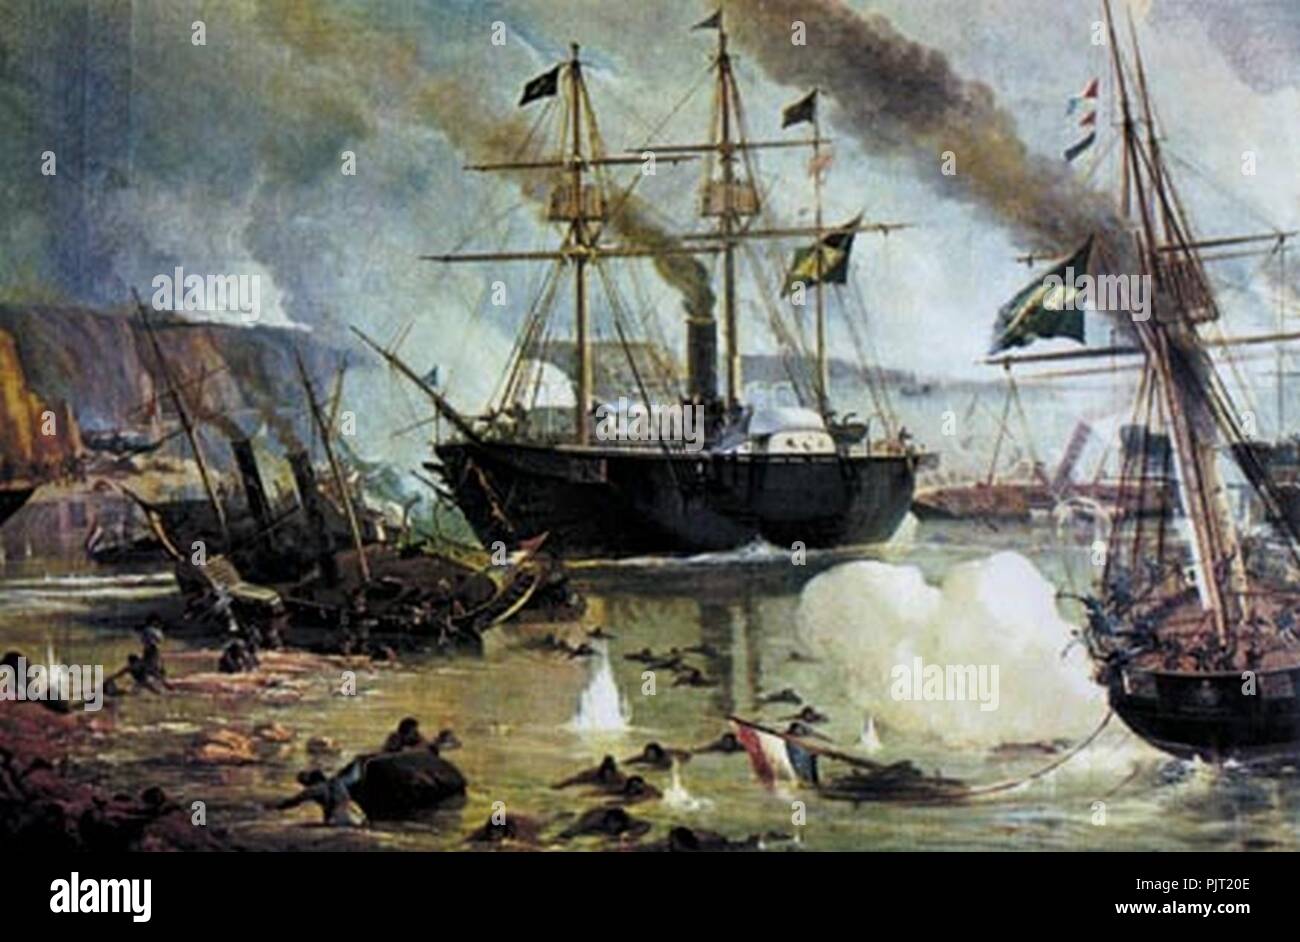 Batalha Naval do Riachuelo Pintura. Stock Photo